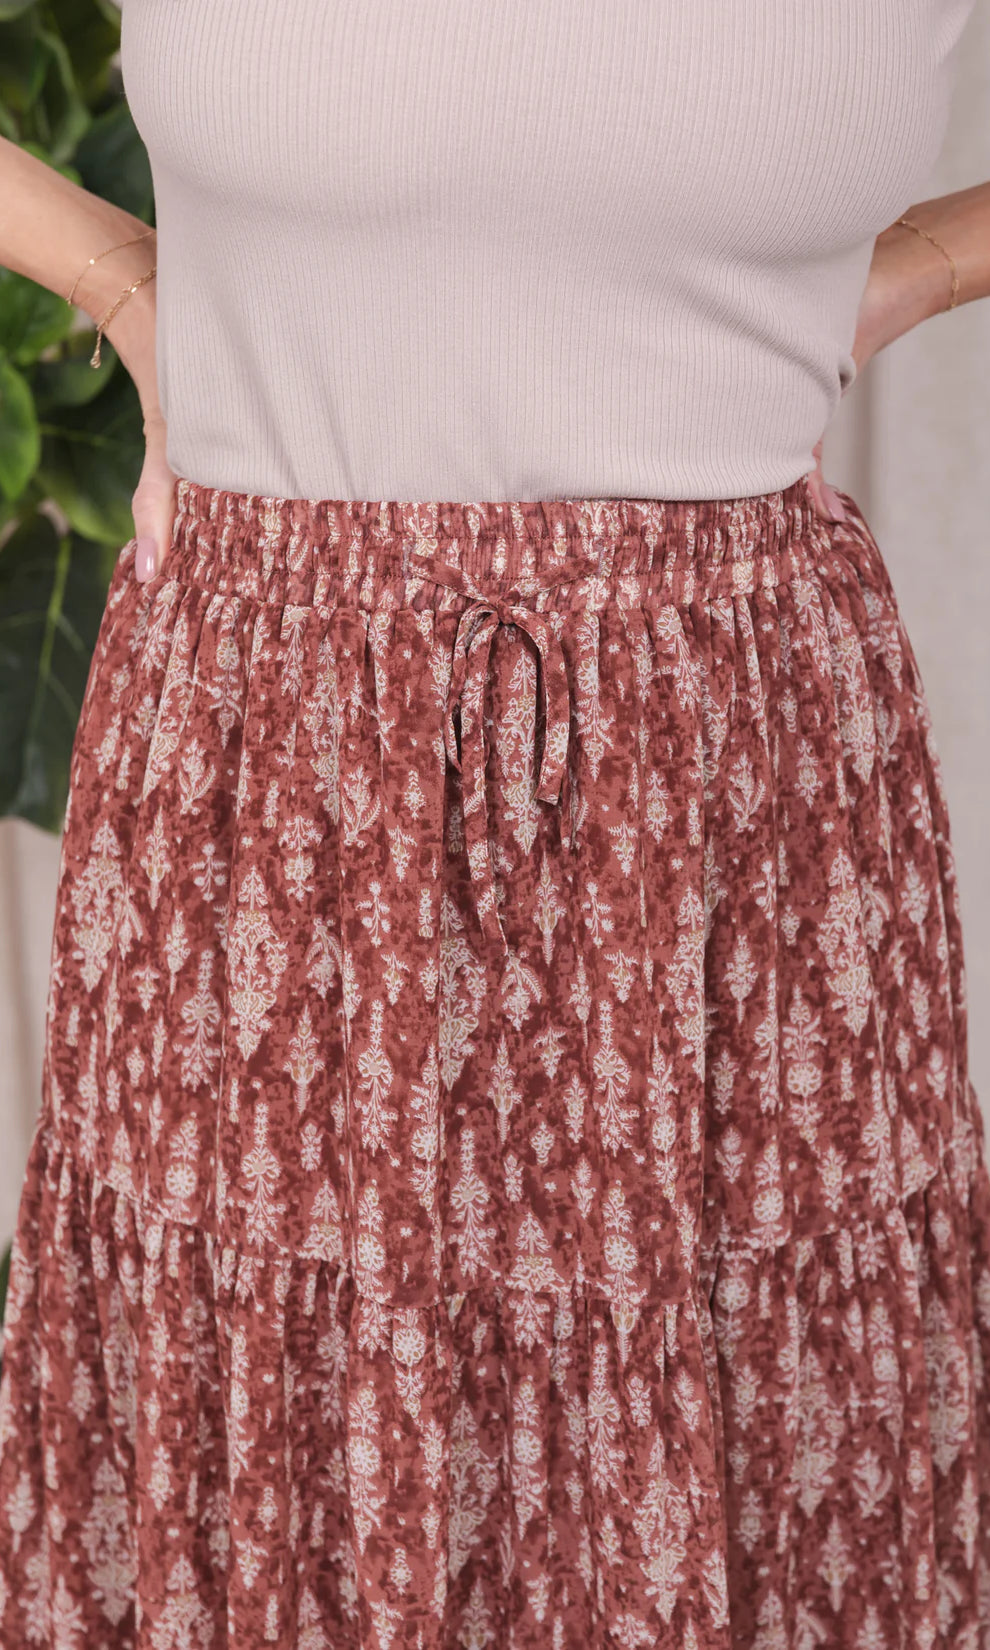 Tiered Maxi Skirt in Floral Damask    Skirt Mikarose- Tilden Co.